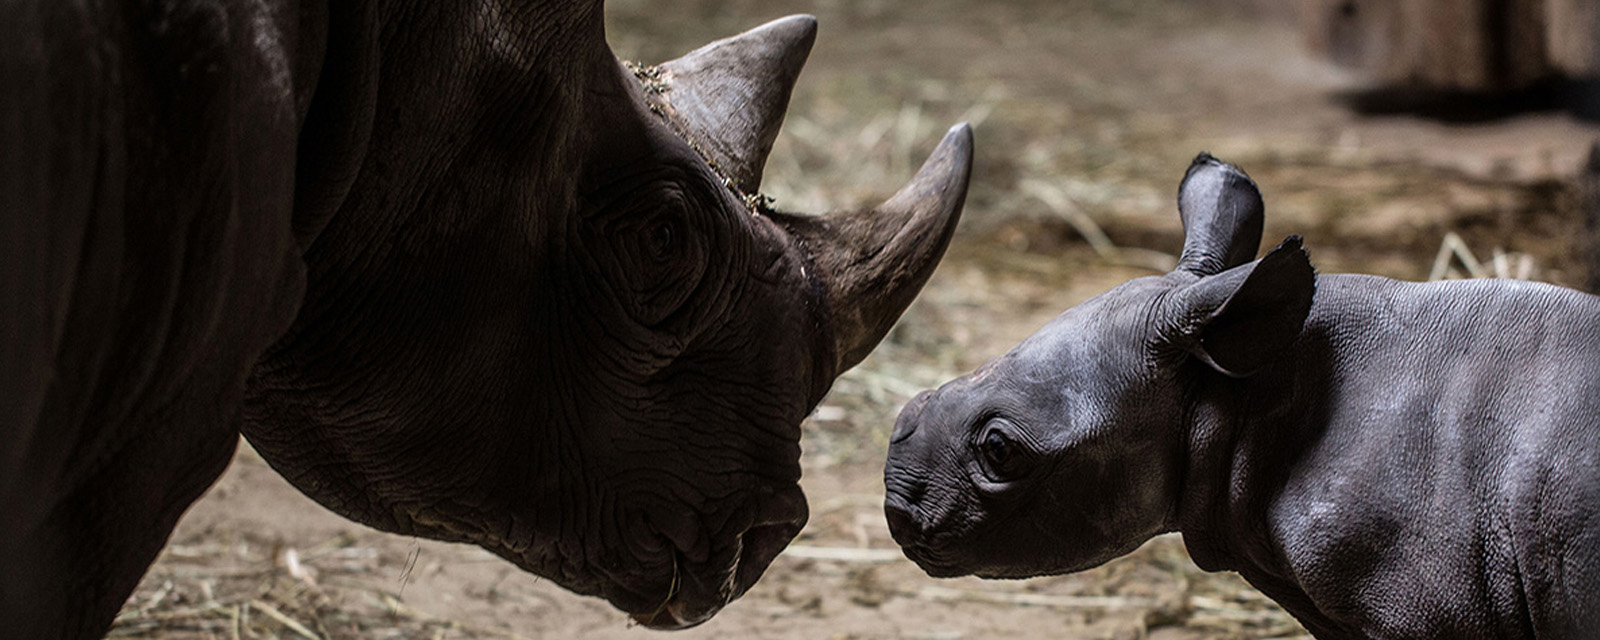 Eastern black rhino - Lincoln Park Zoo